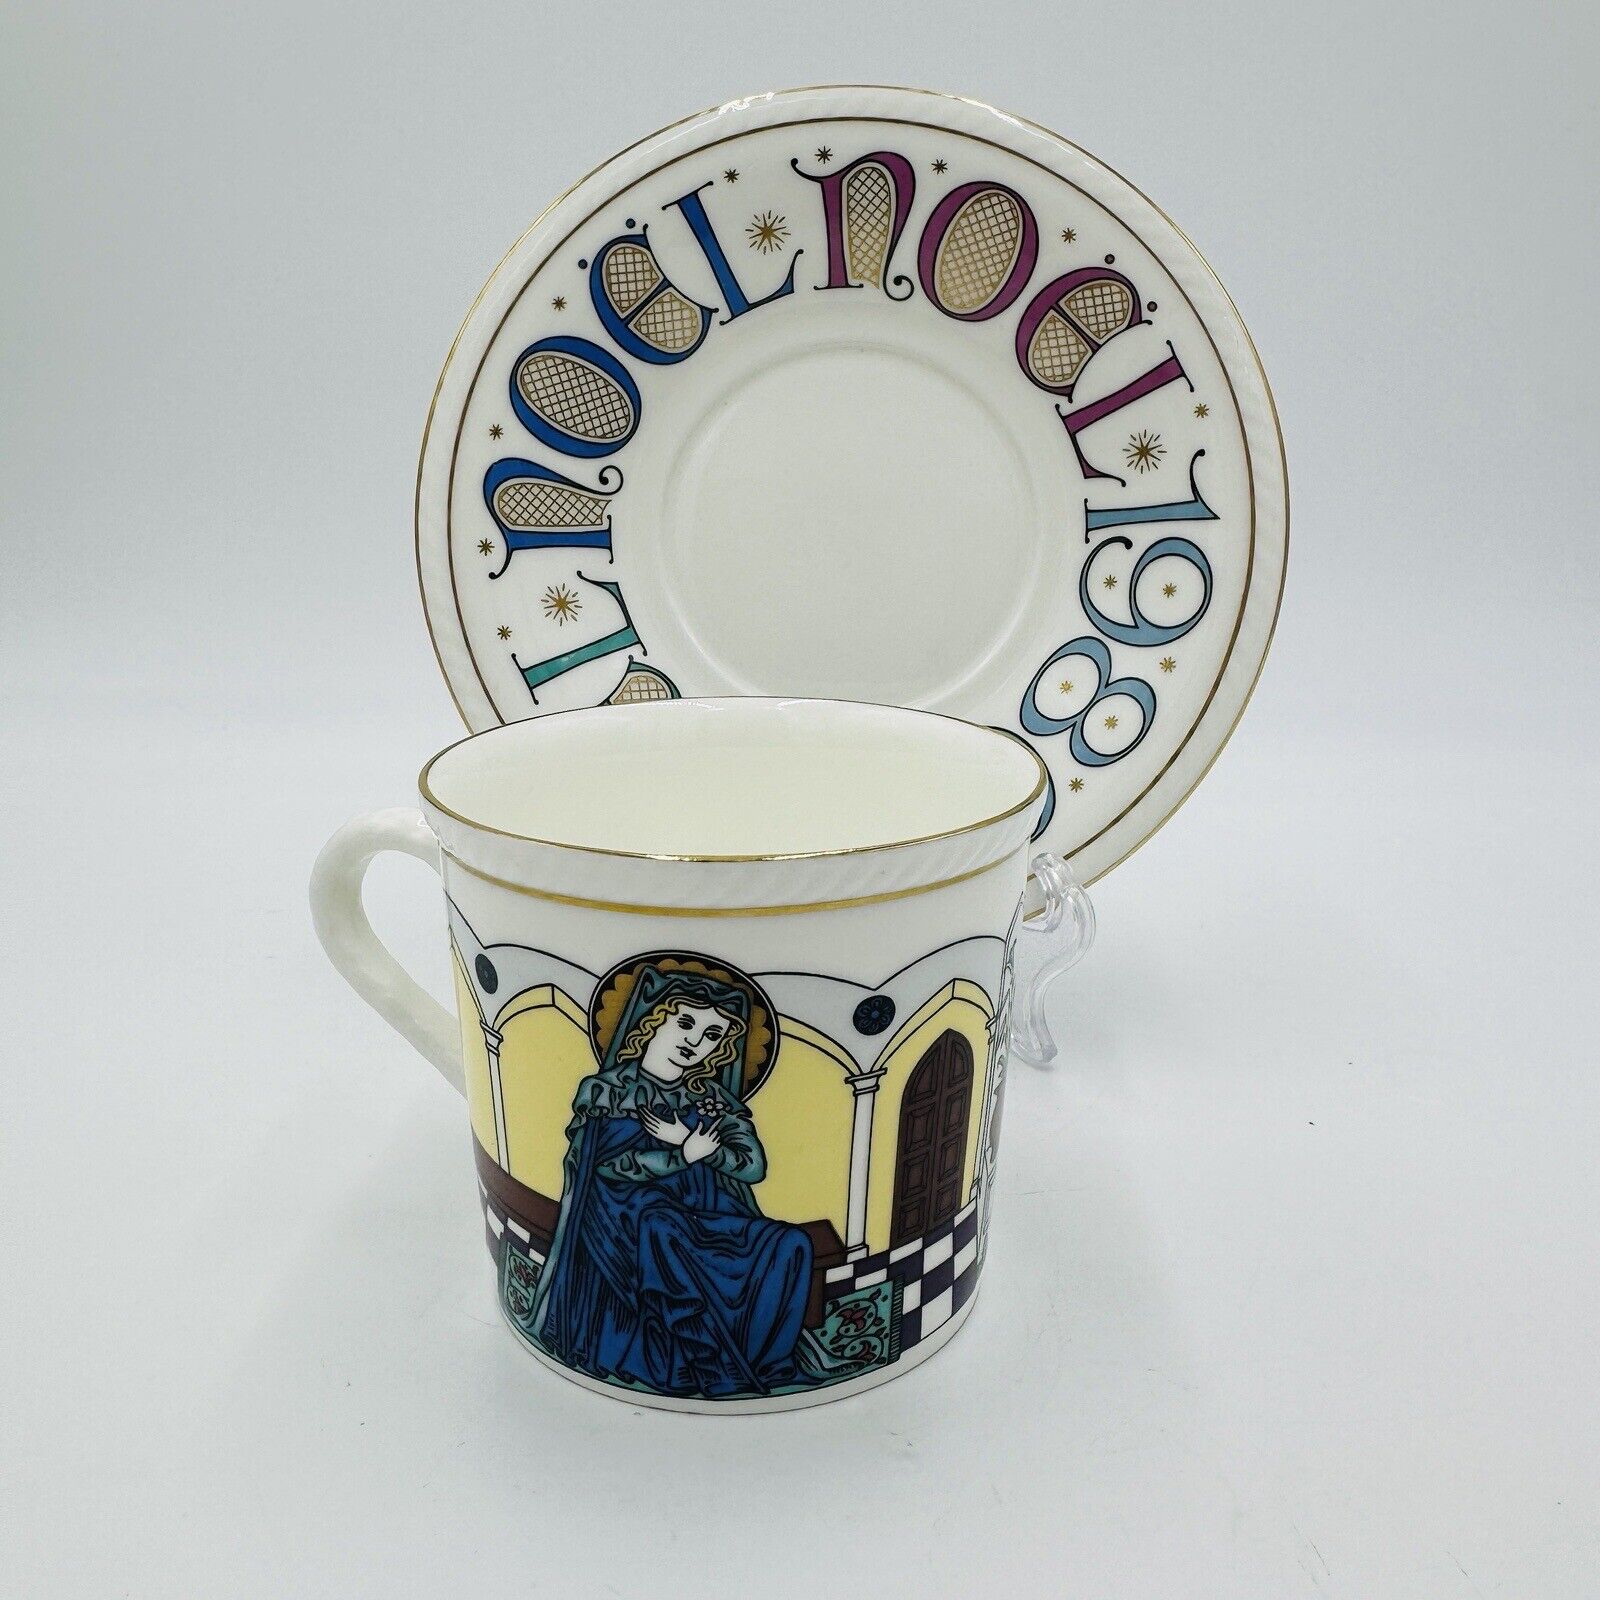 Royal Doulton Teacup & Saucer The Annunciation Limited Edition Porcelain Vintage